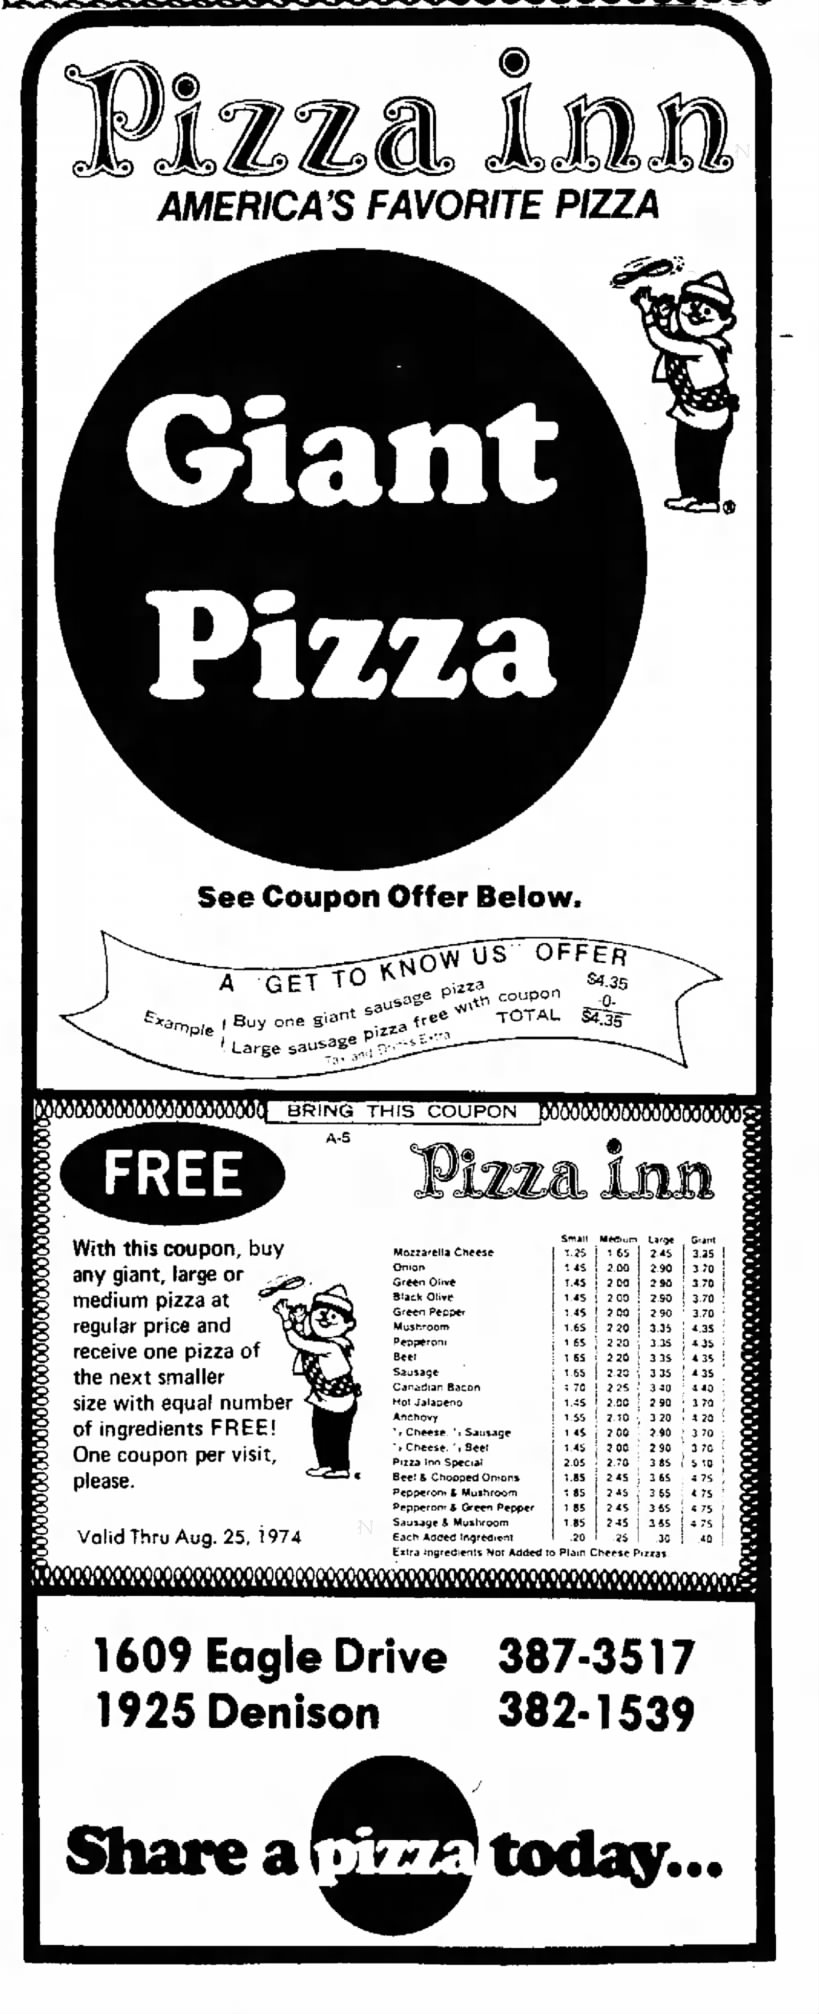 Pizza Inn - America's Favorite Pizza - Giant Pizza - Denton